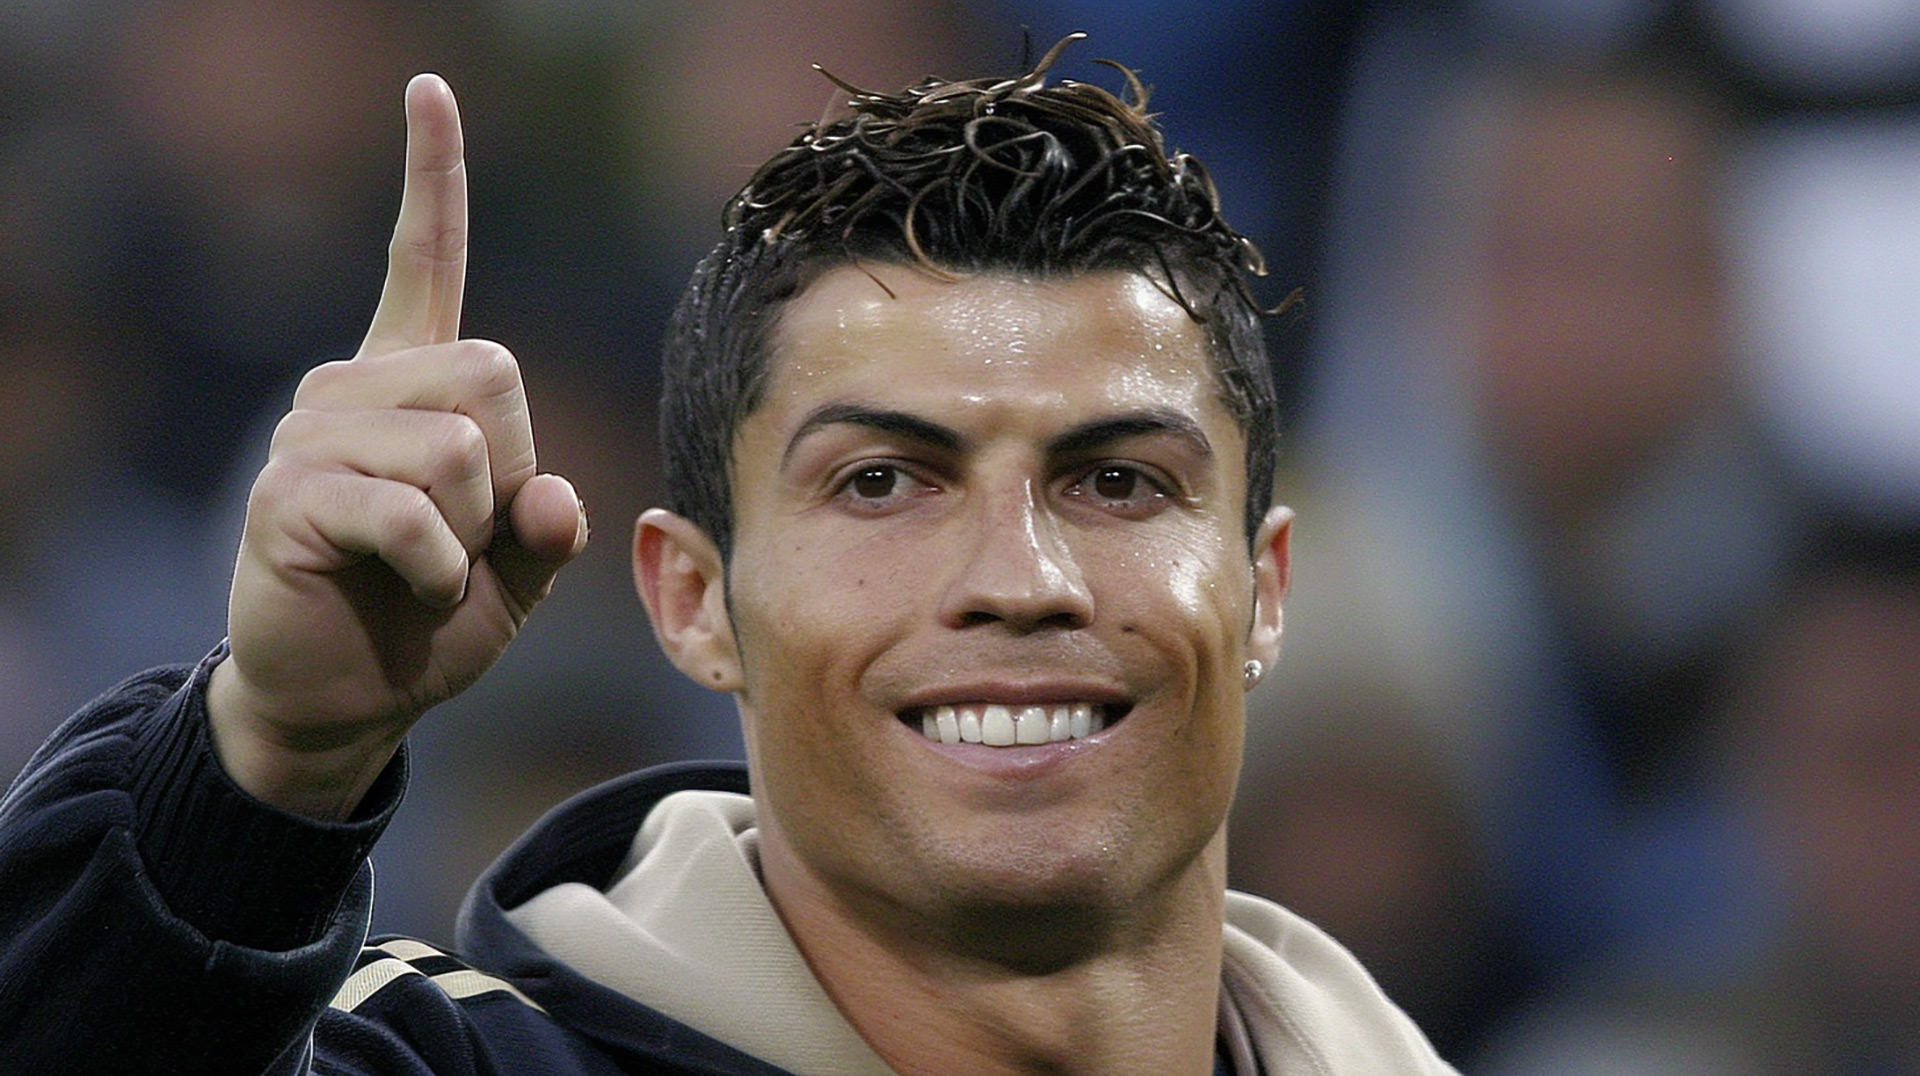 Dynamic Ronaldo Real Madrid Desktop Background: 8K